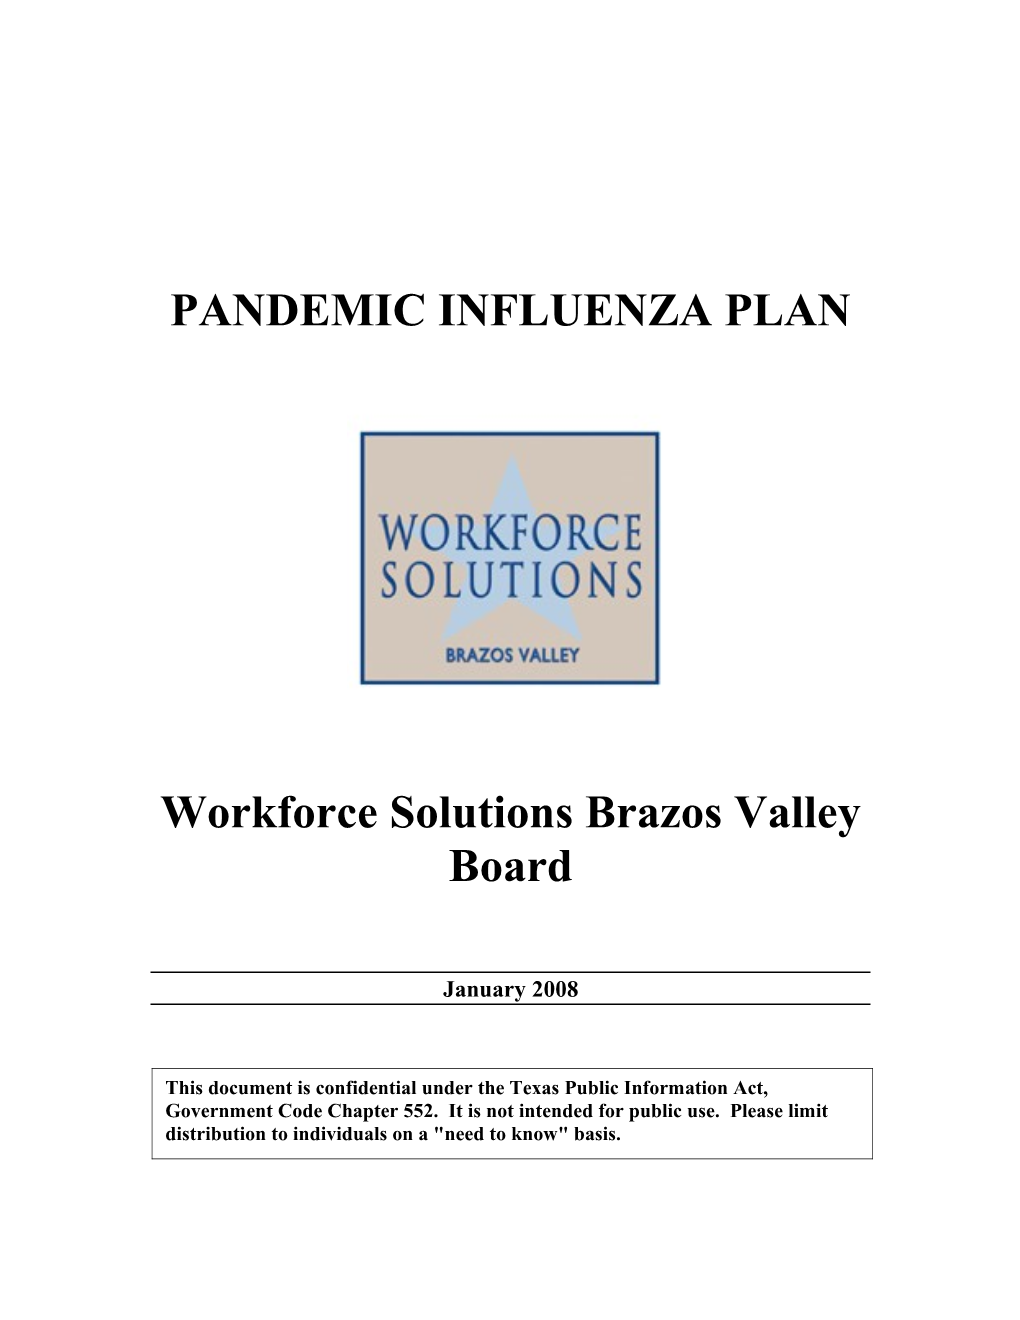 Workforce Solutions Bravos Valley Board